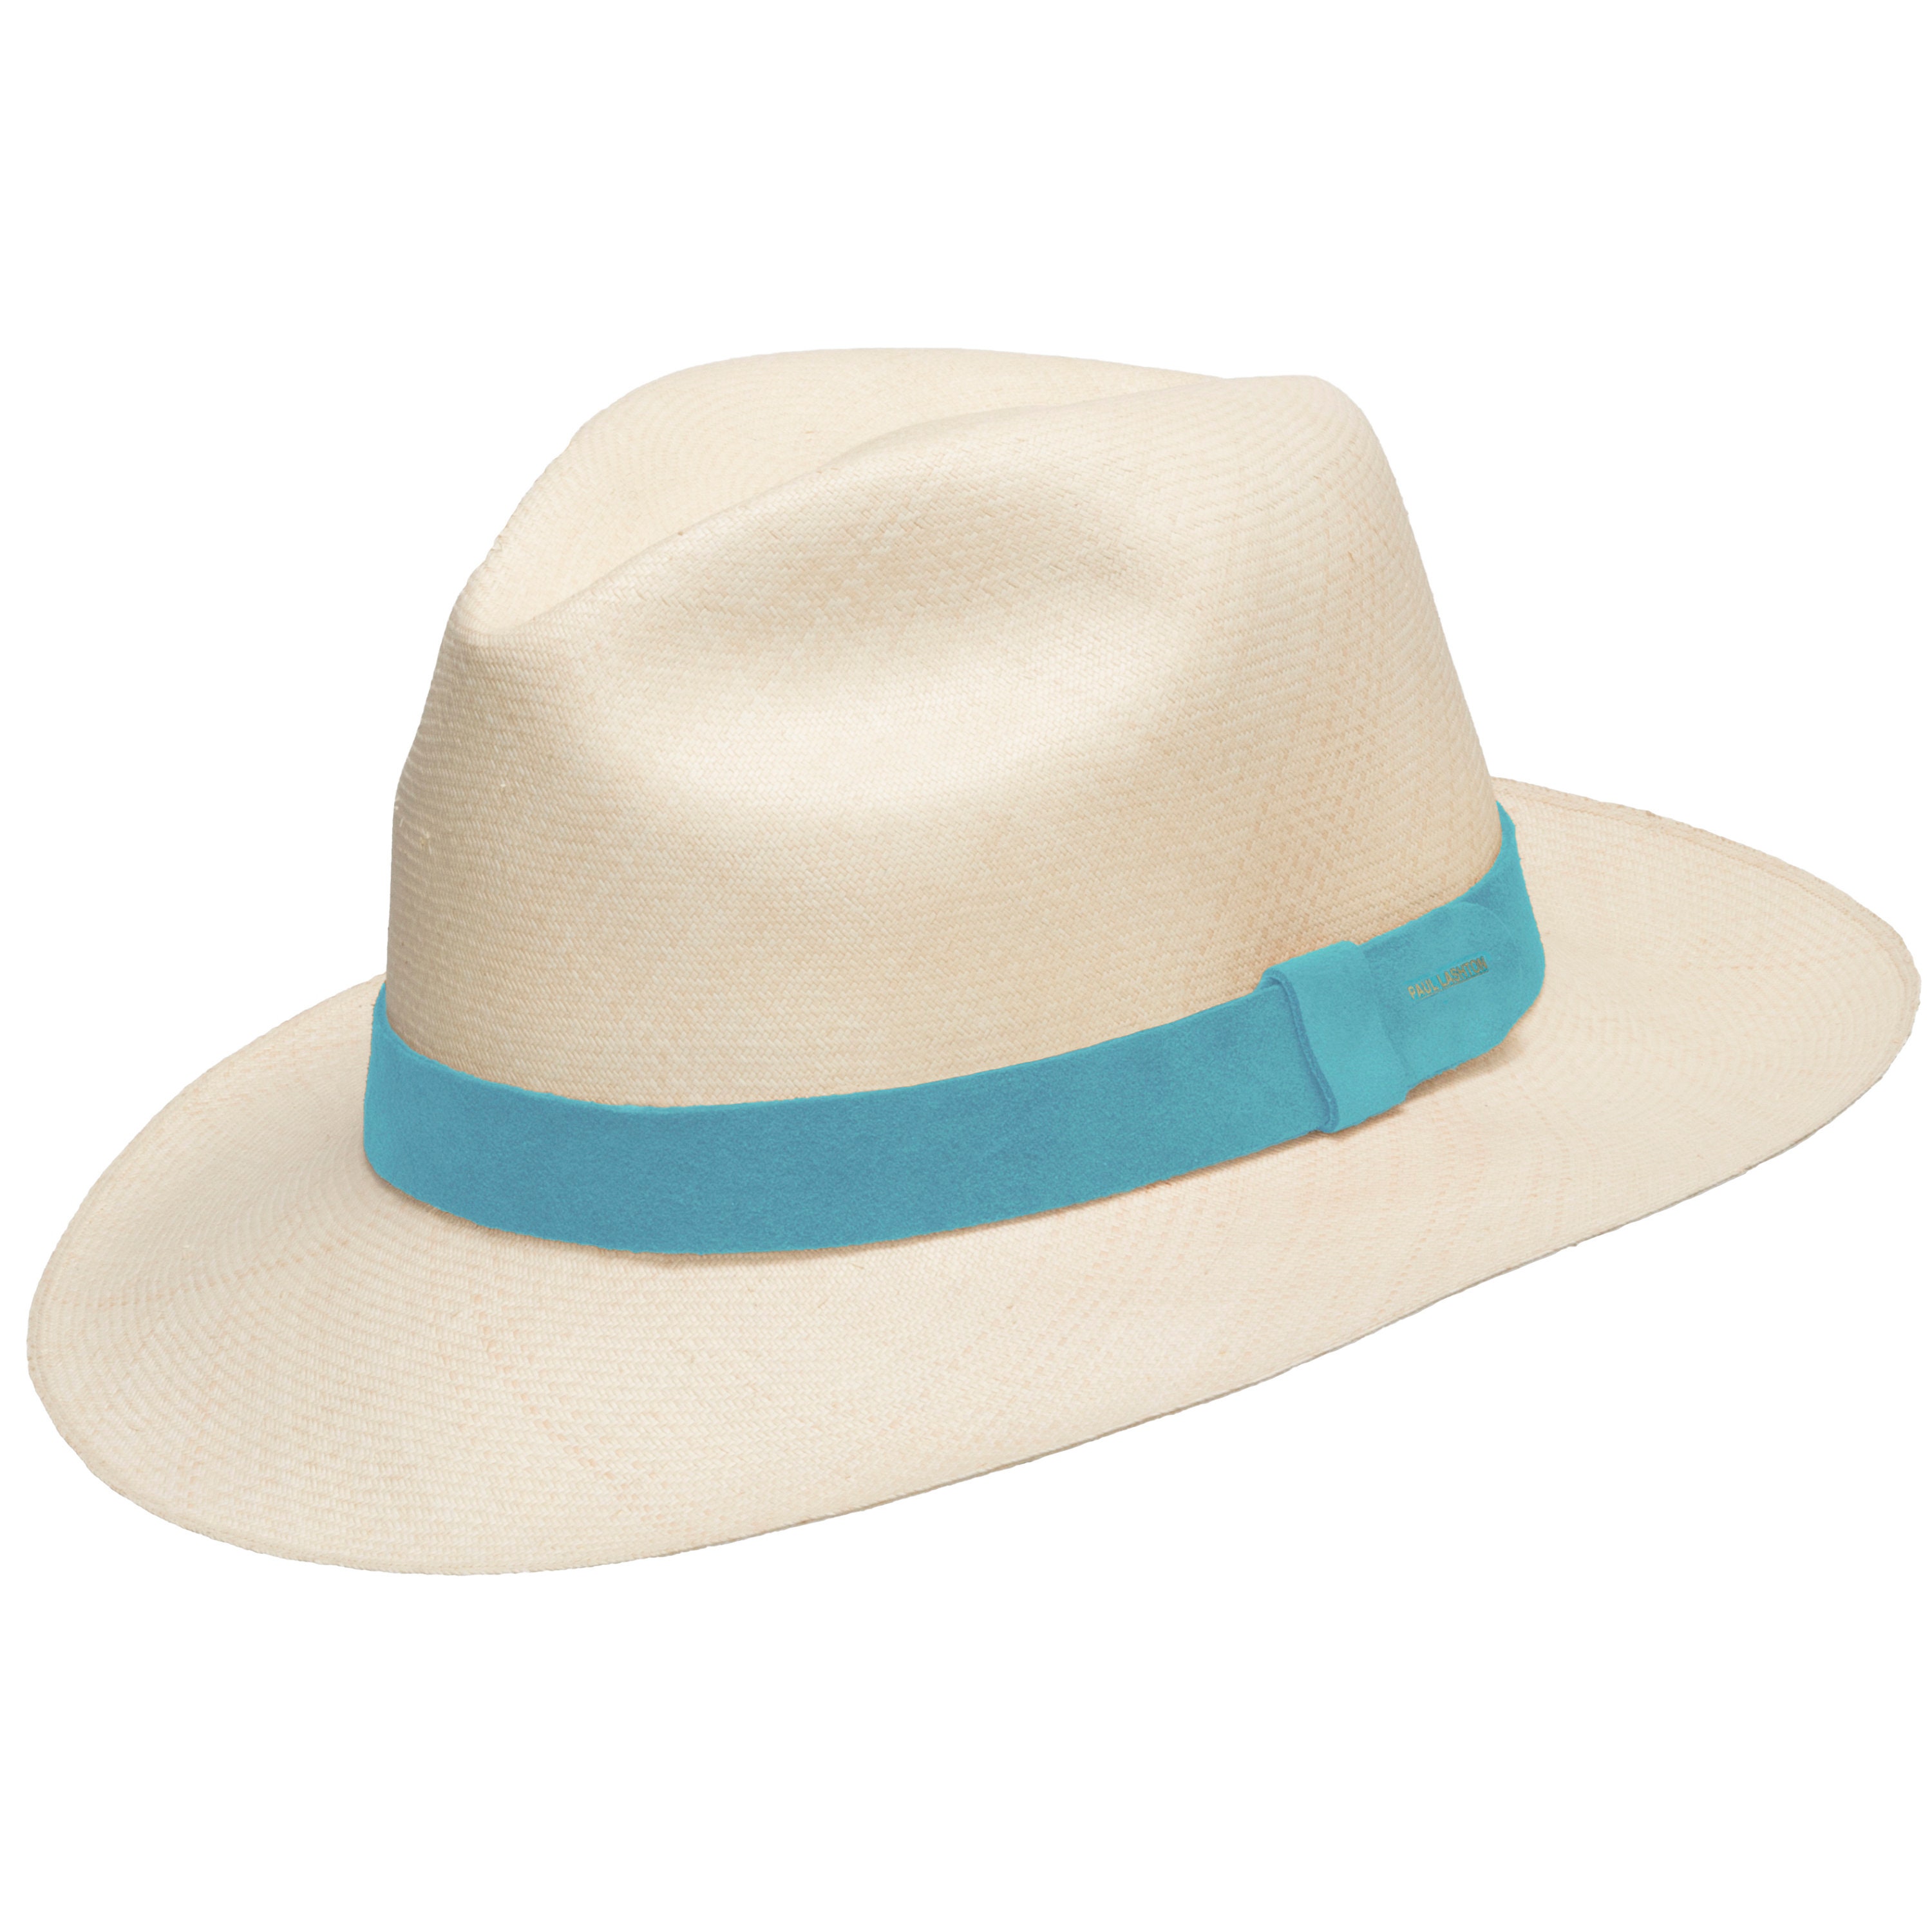 Paul Lashton Tandy Leather Suede Adjustable Hatband for All Brimmed Fedora Porkpie Cowboy Top Panama Wool Felt Hats